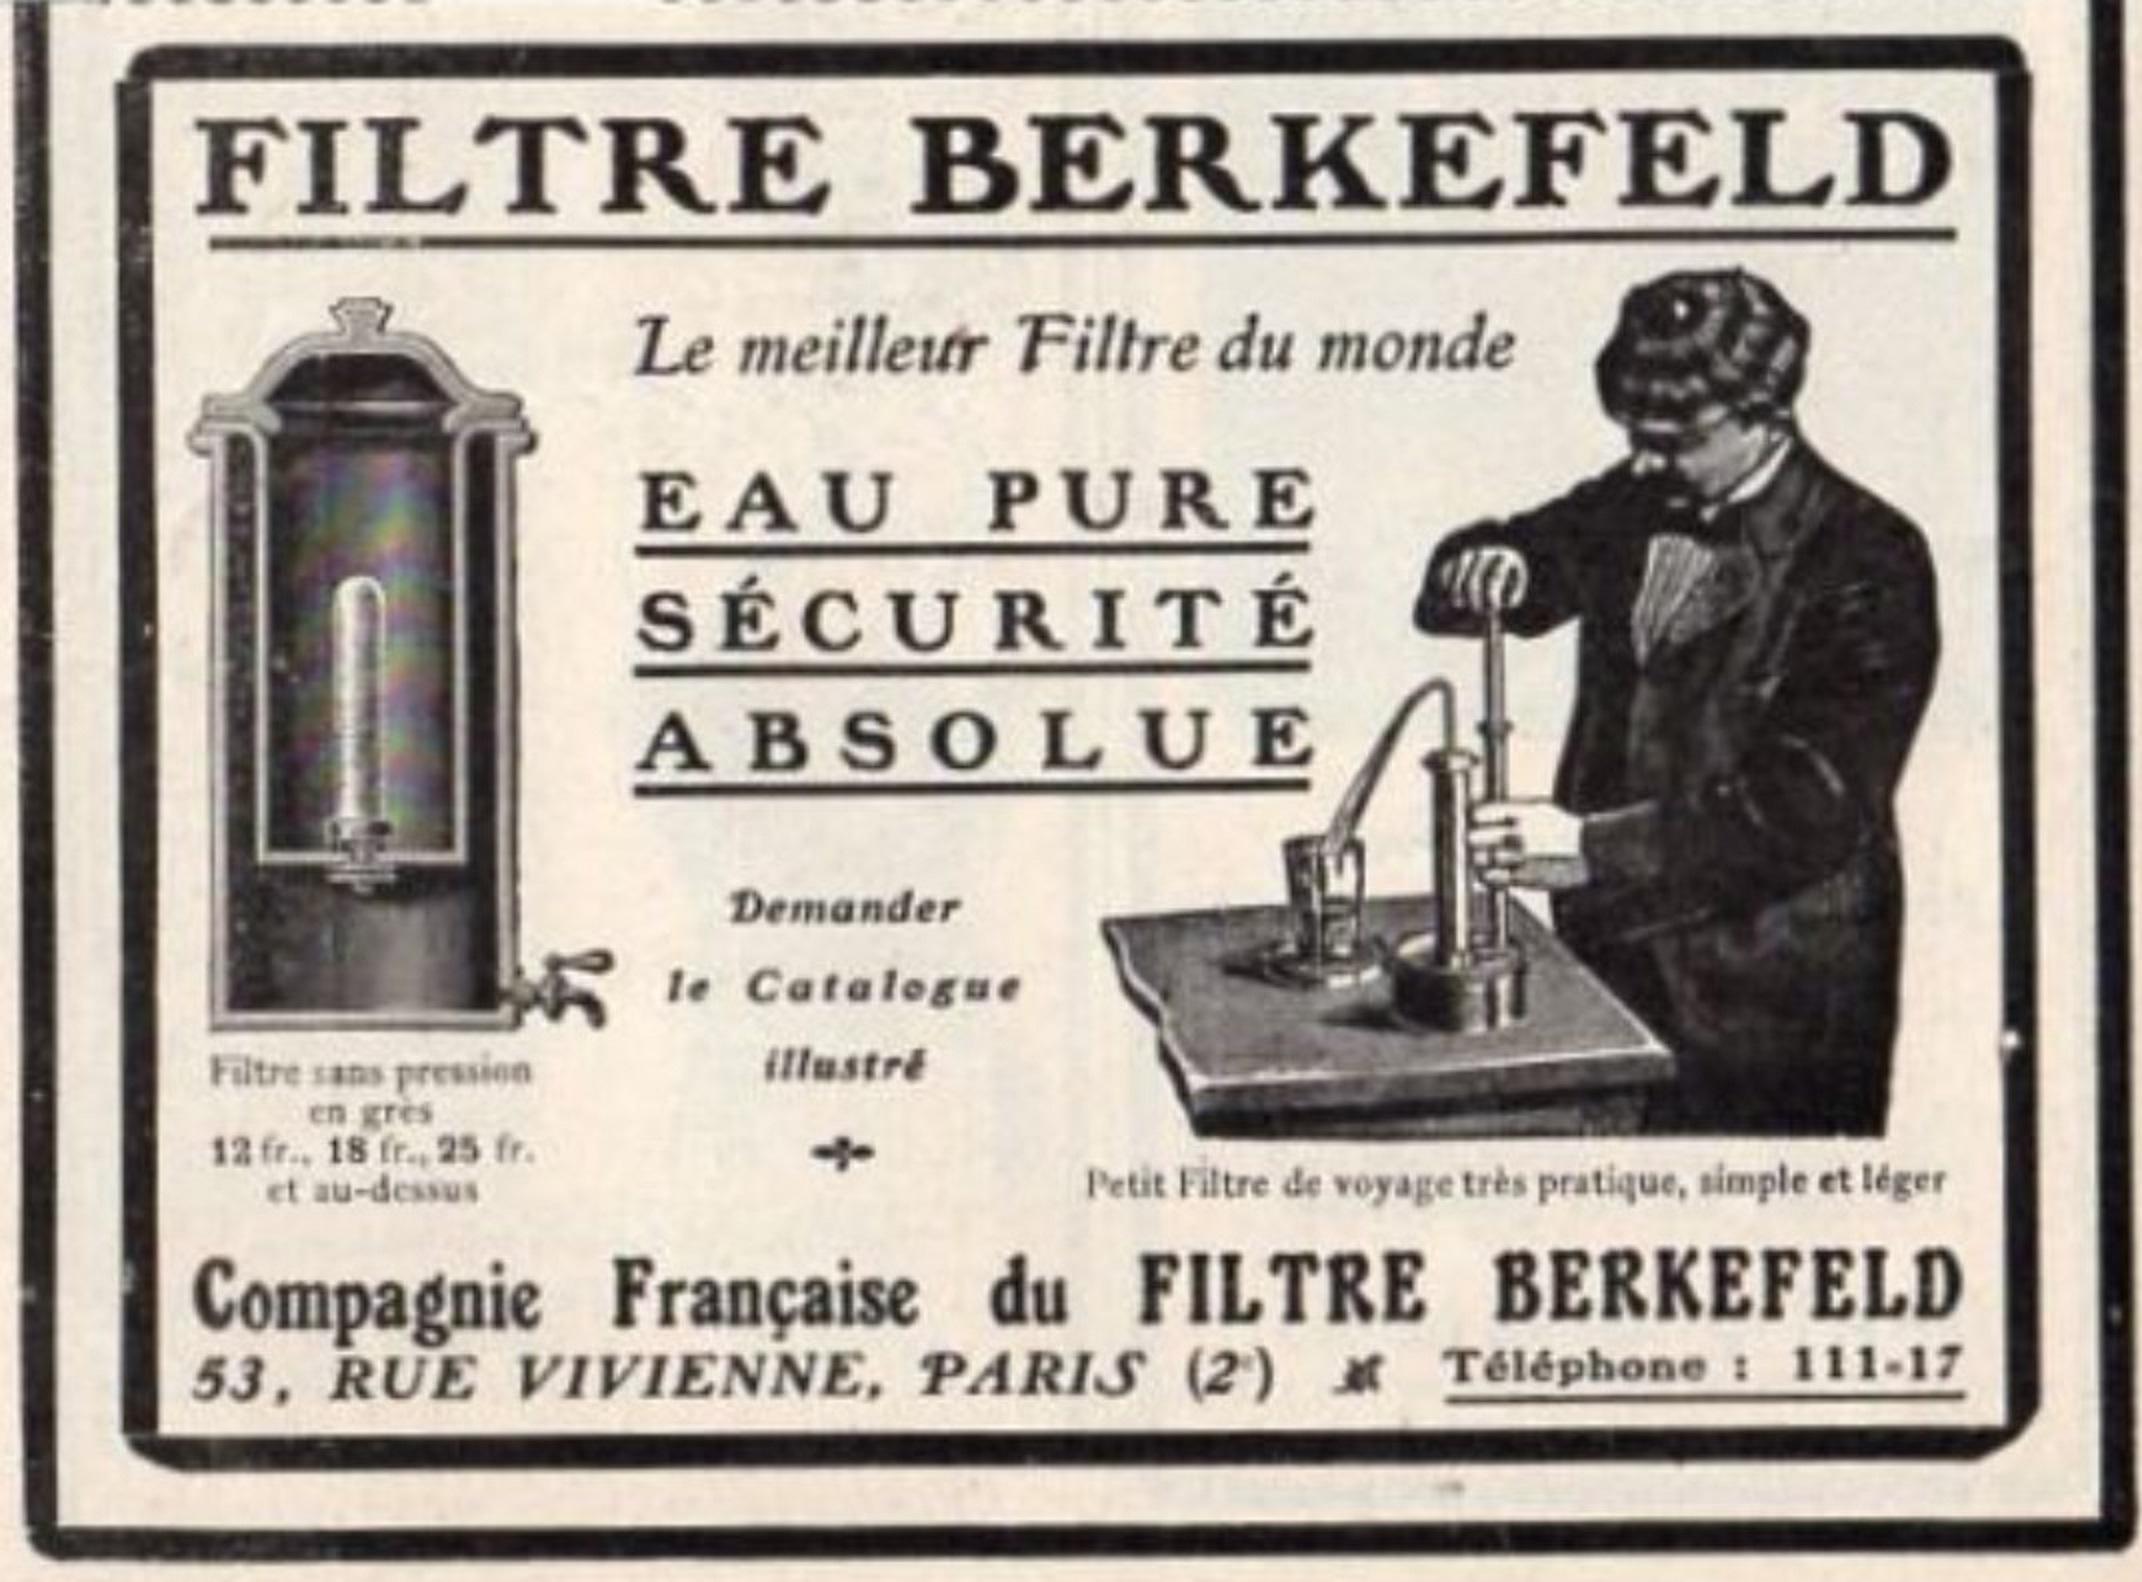 Berkefeld Filter Gesellschaft G.M.B.H Ce, Jugendstil, Art Nouveau, Liberty, 1900 For Sale 6